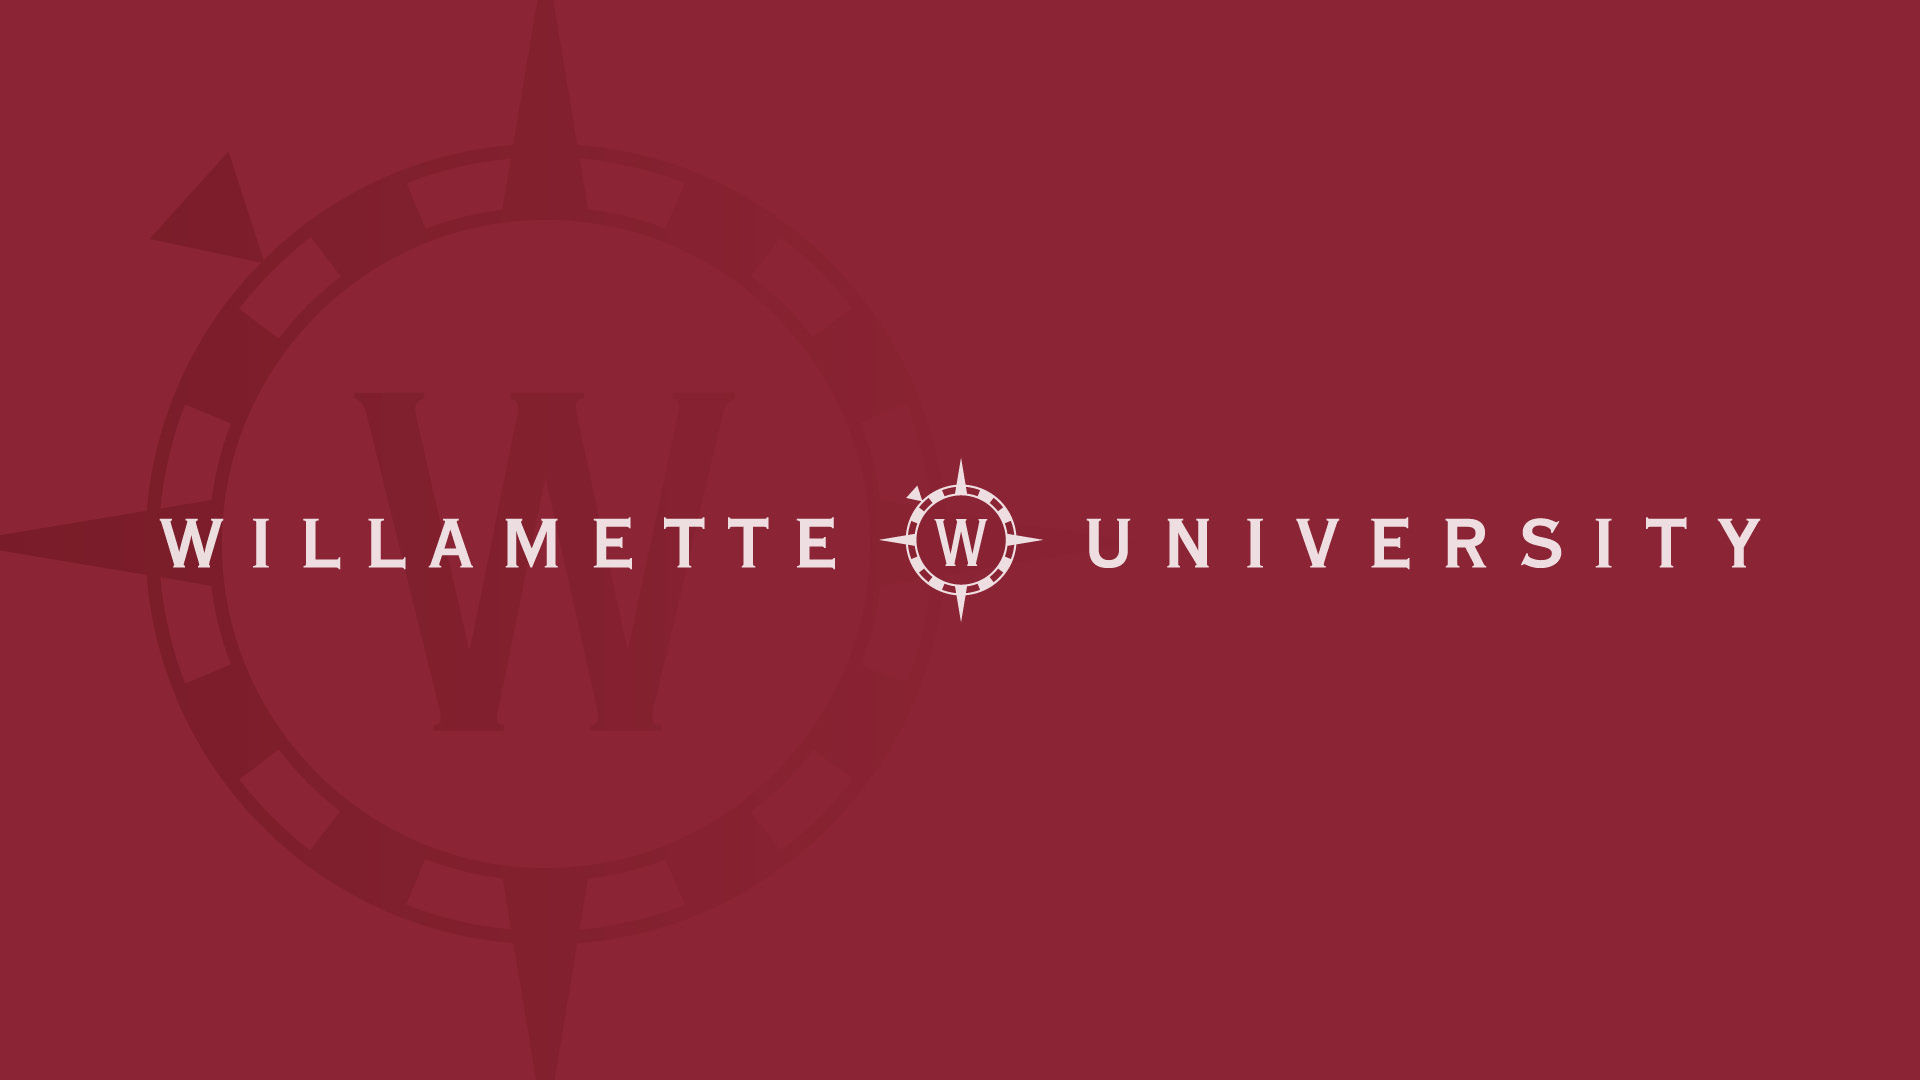 Cardinal background, Willamette Compass watermark, Text "Willamette University"